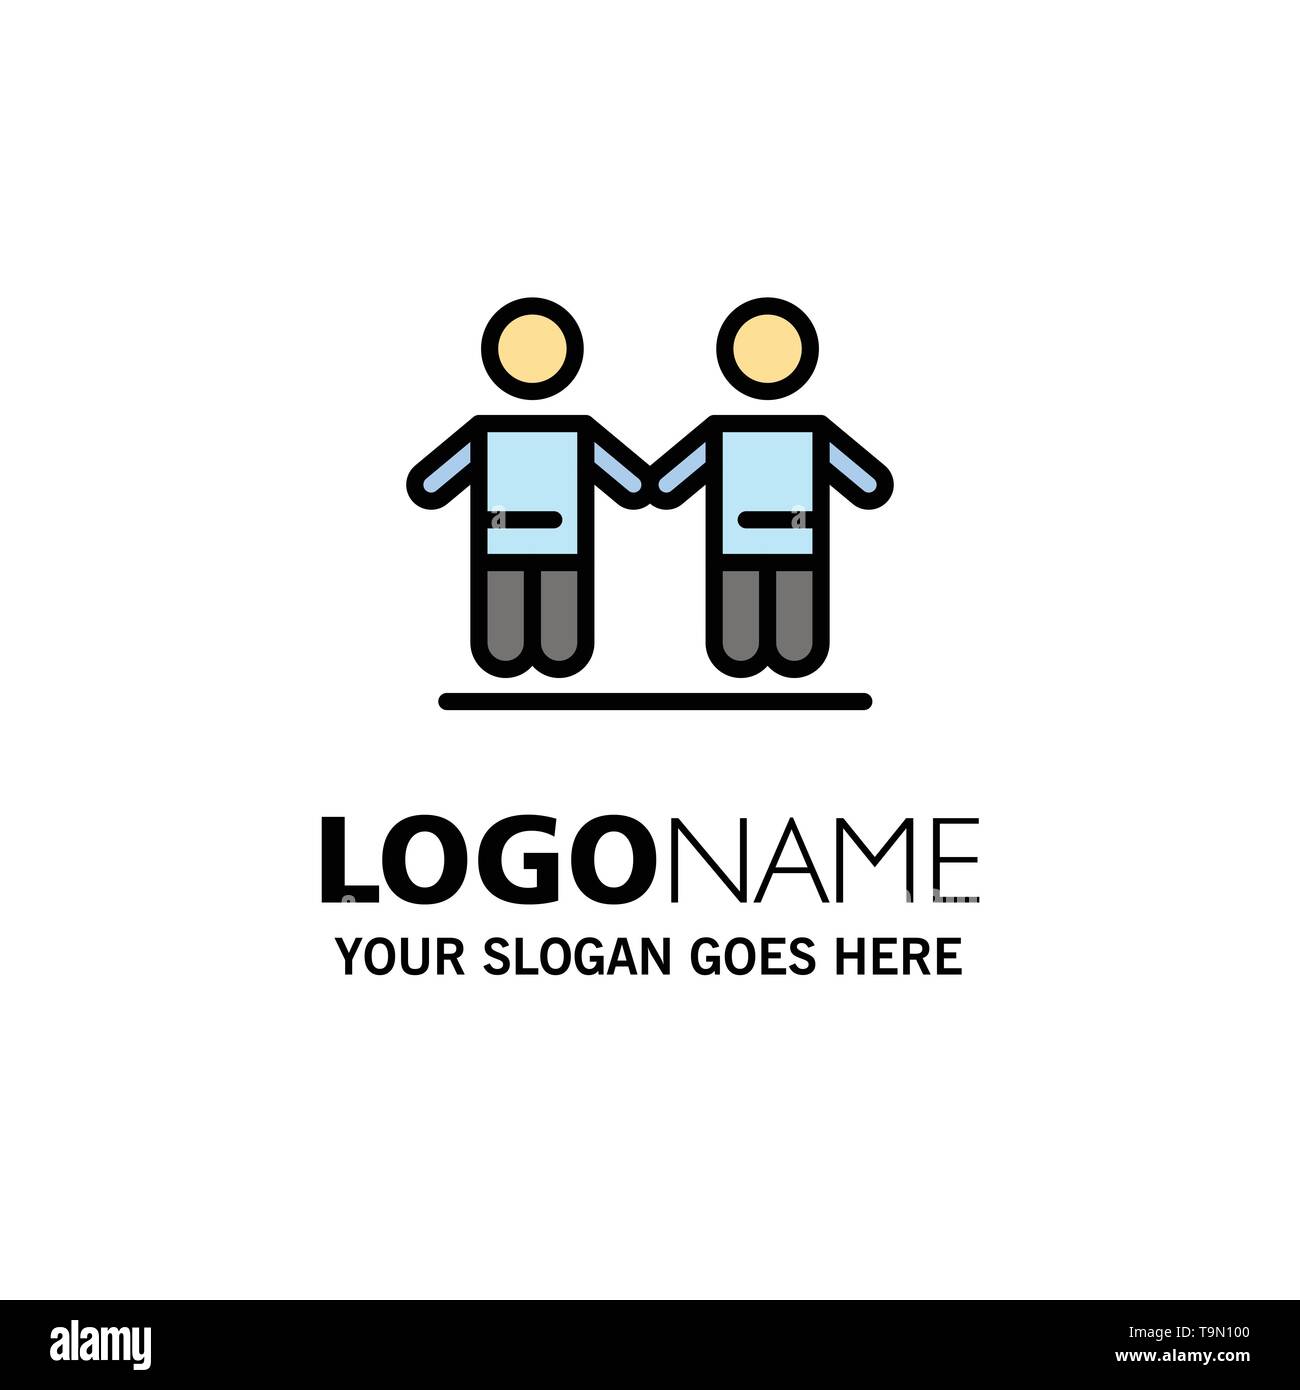 Group Logos | Group Logo Maker | BrandCrowd